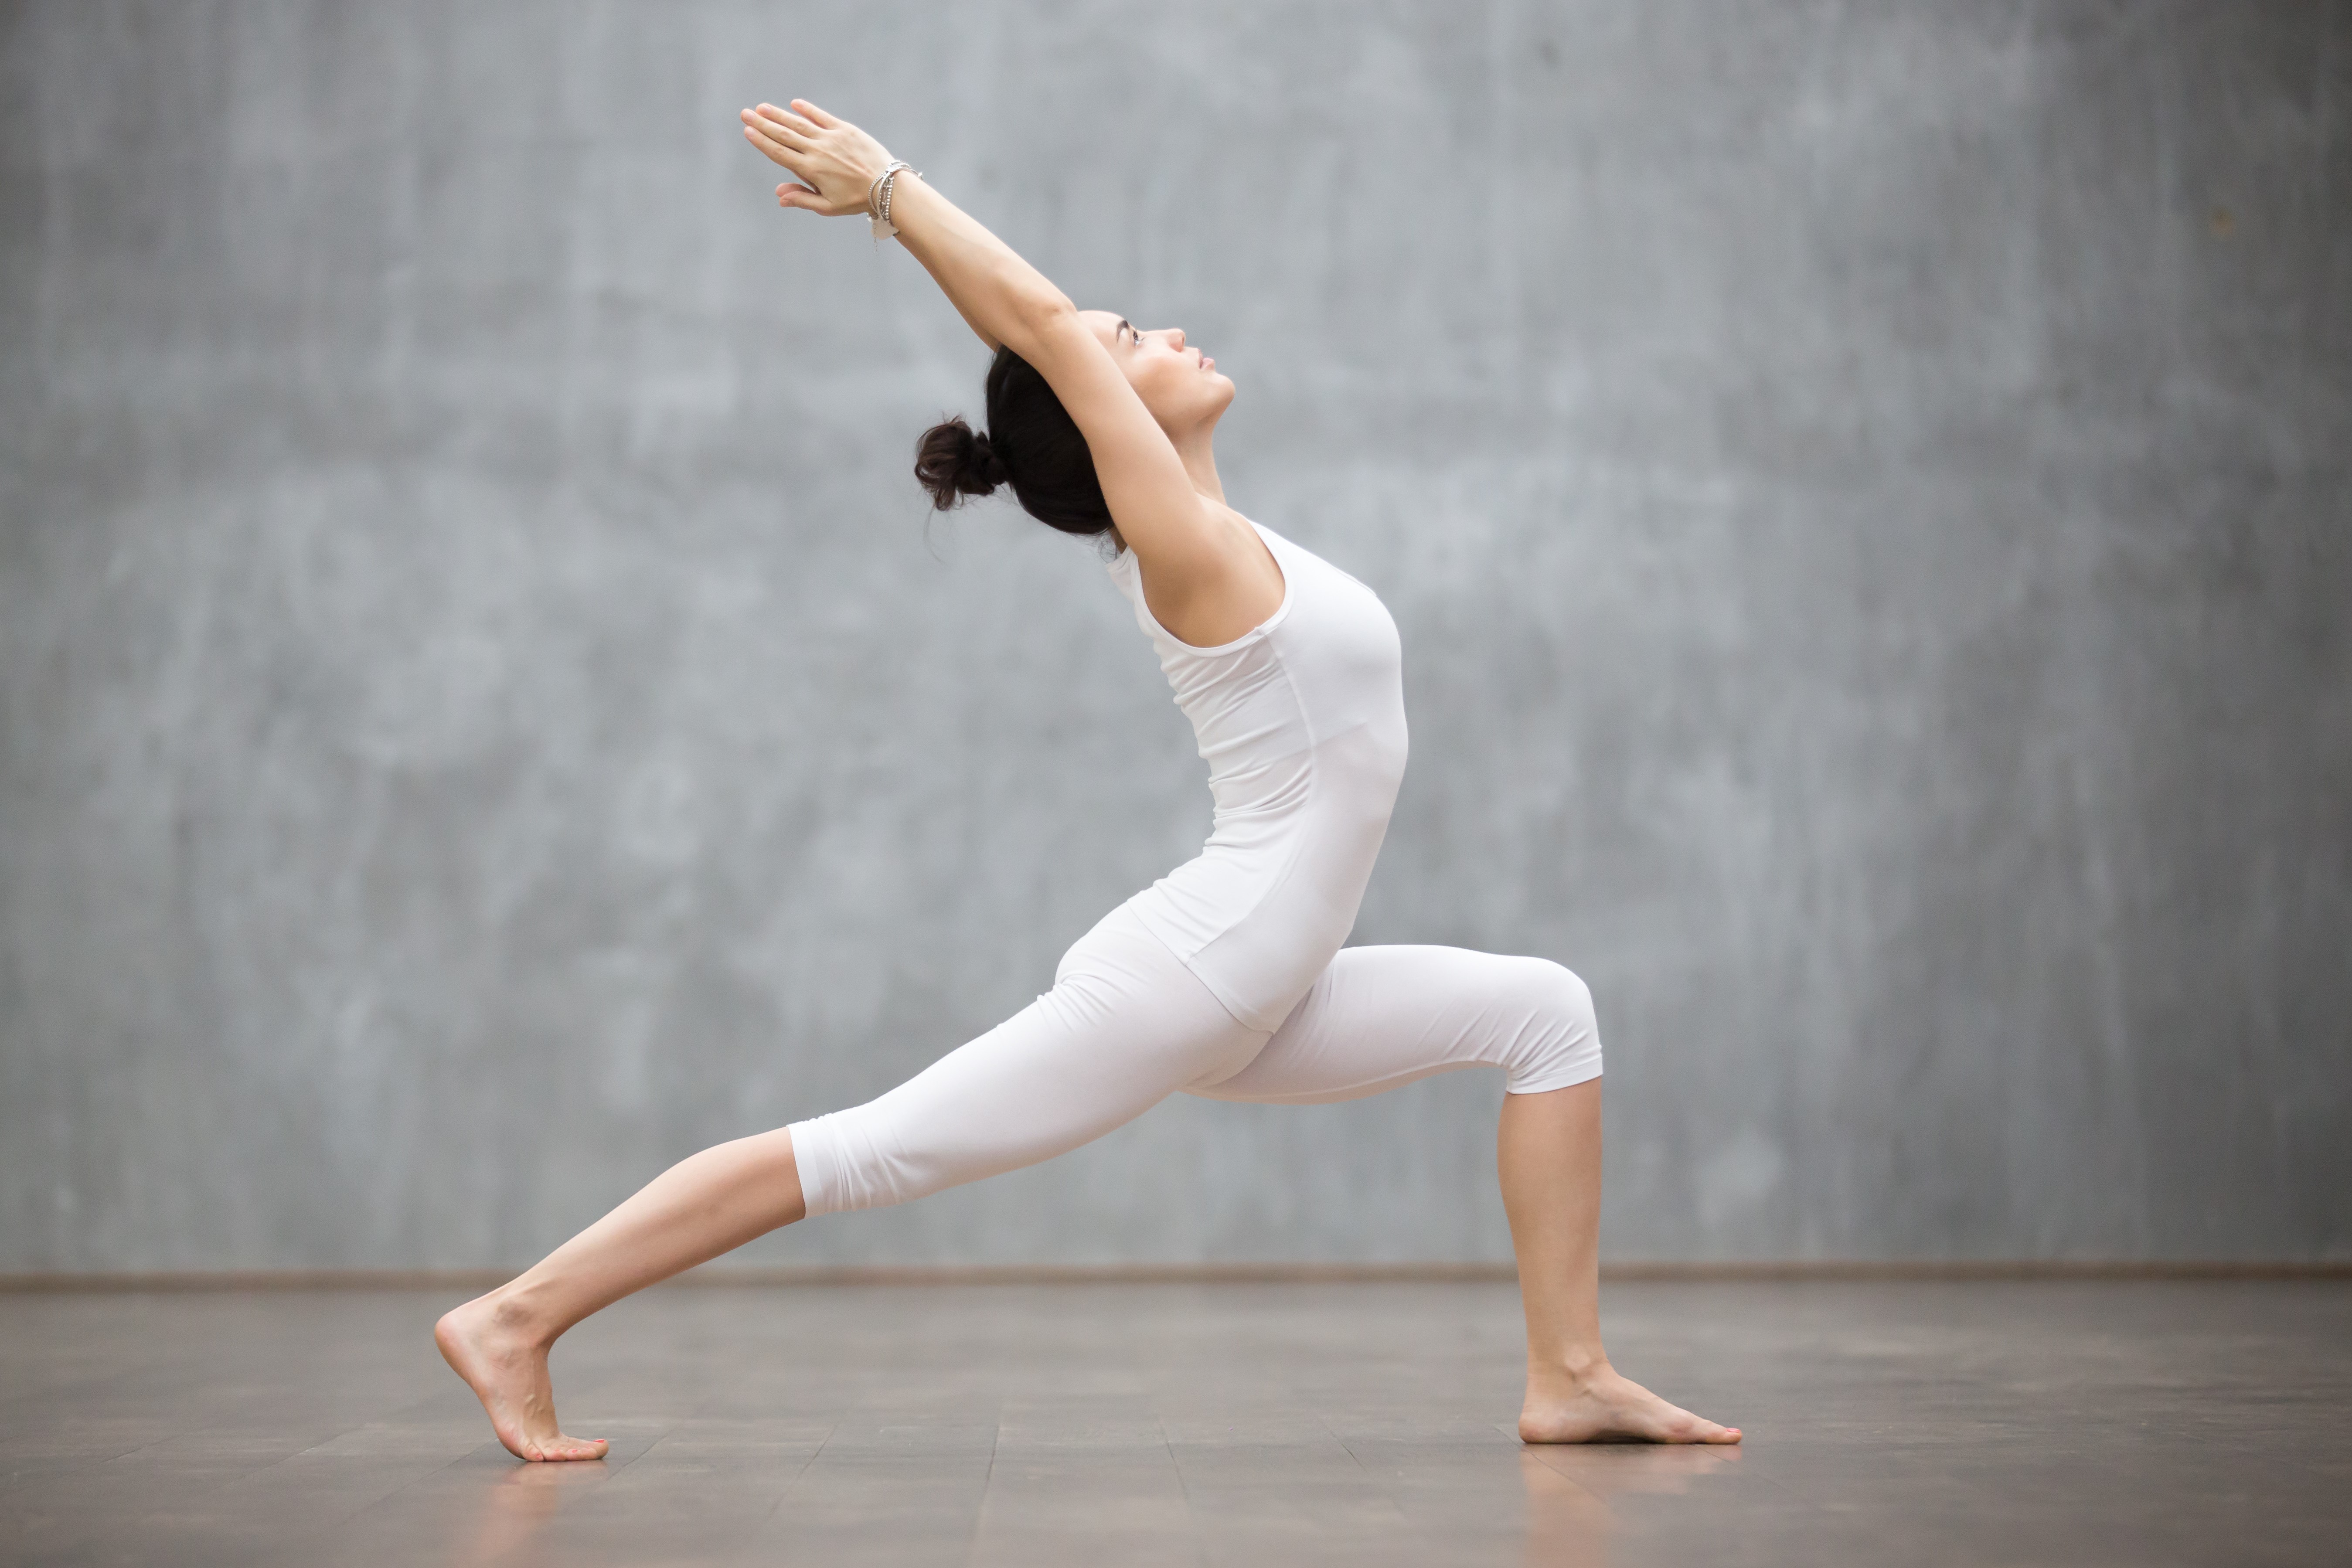 Yoga Vinyasa